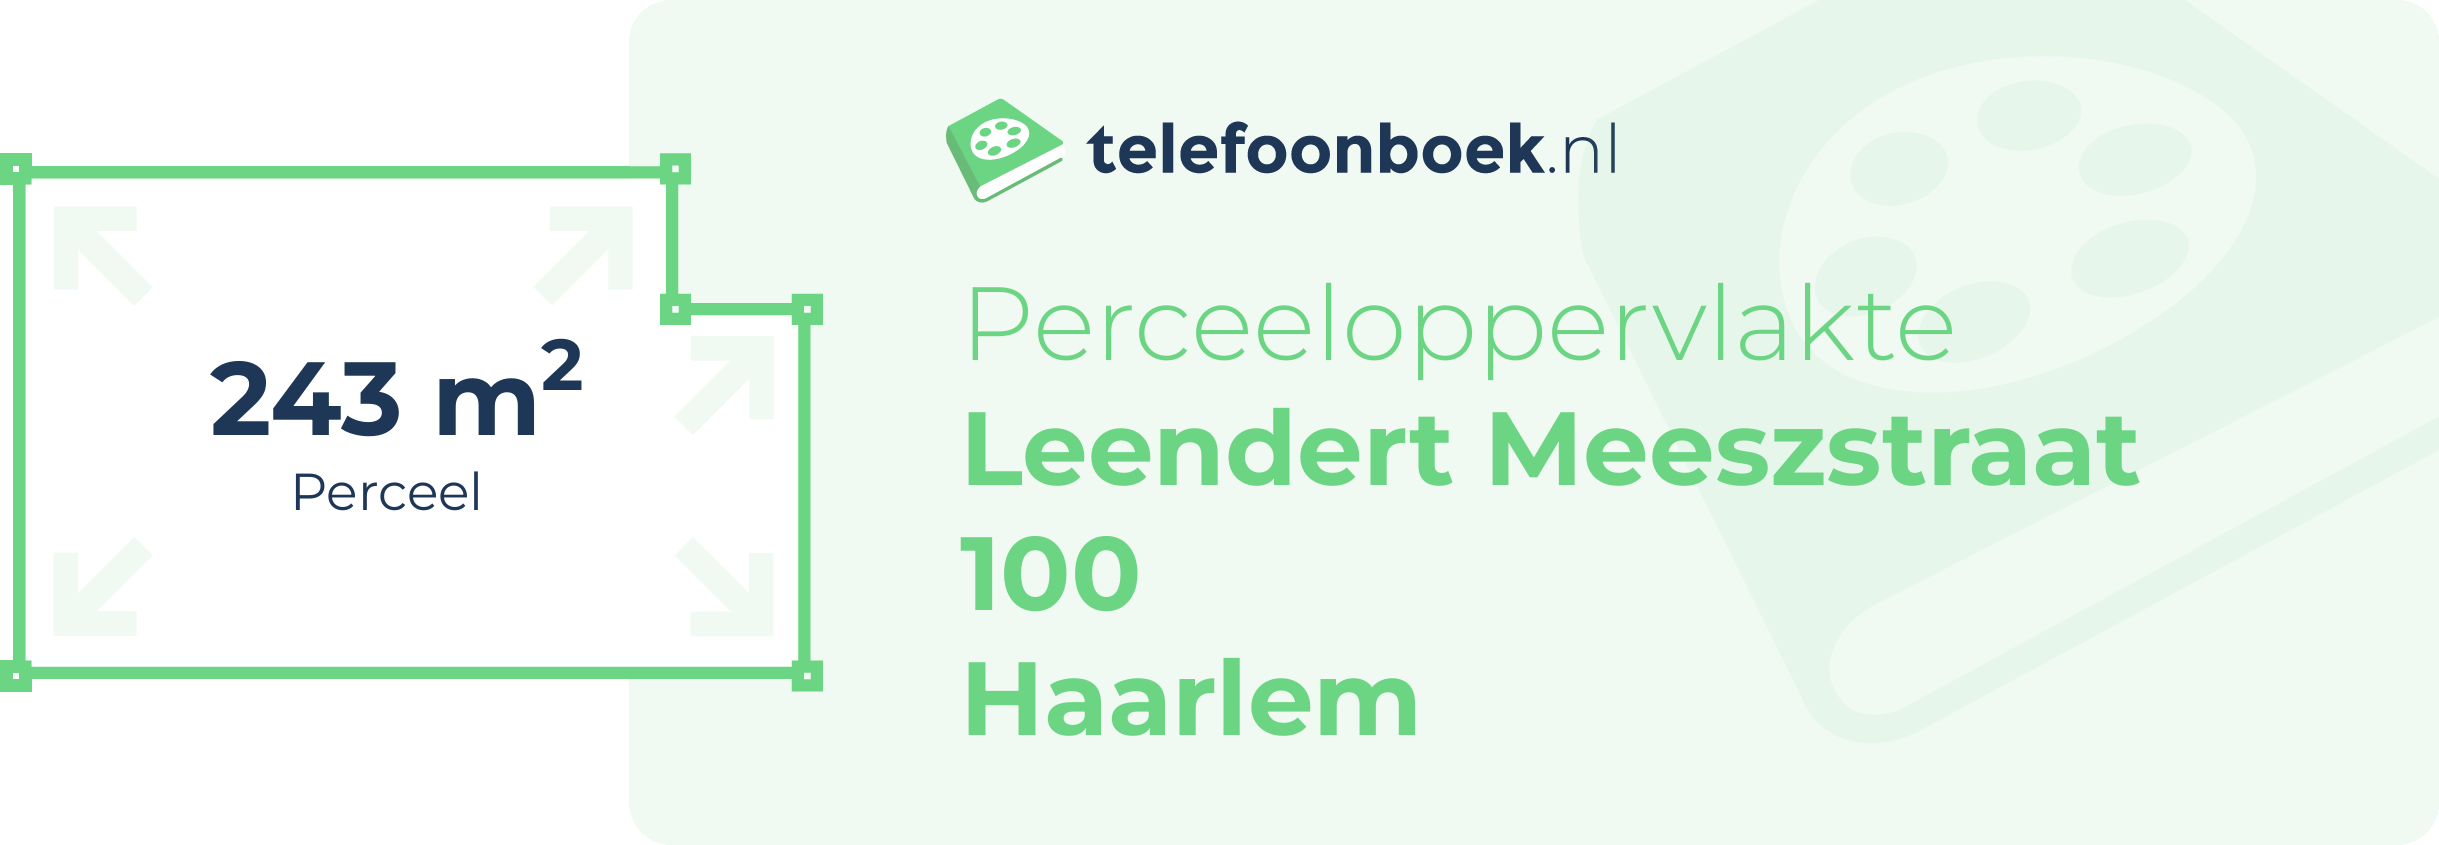 Perceeloppervlakte Leendert Meeszstraat 100 Haarlem